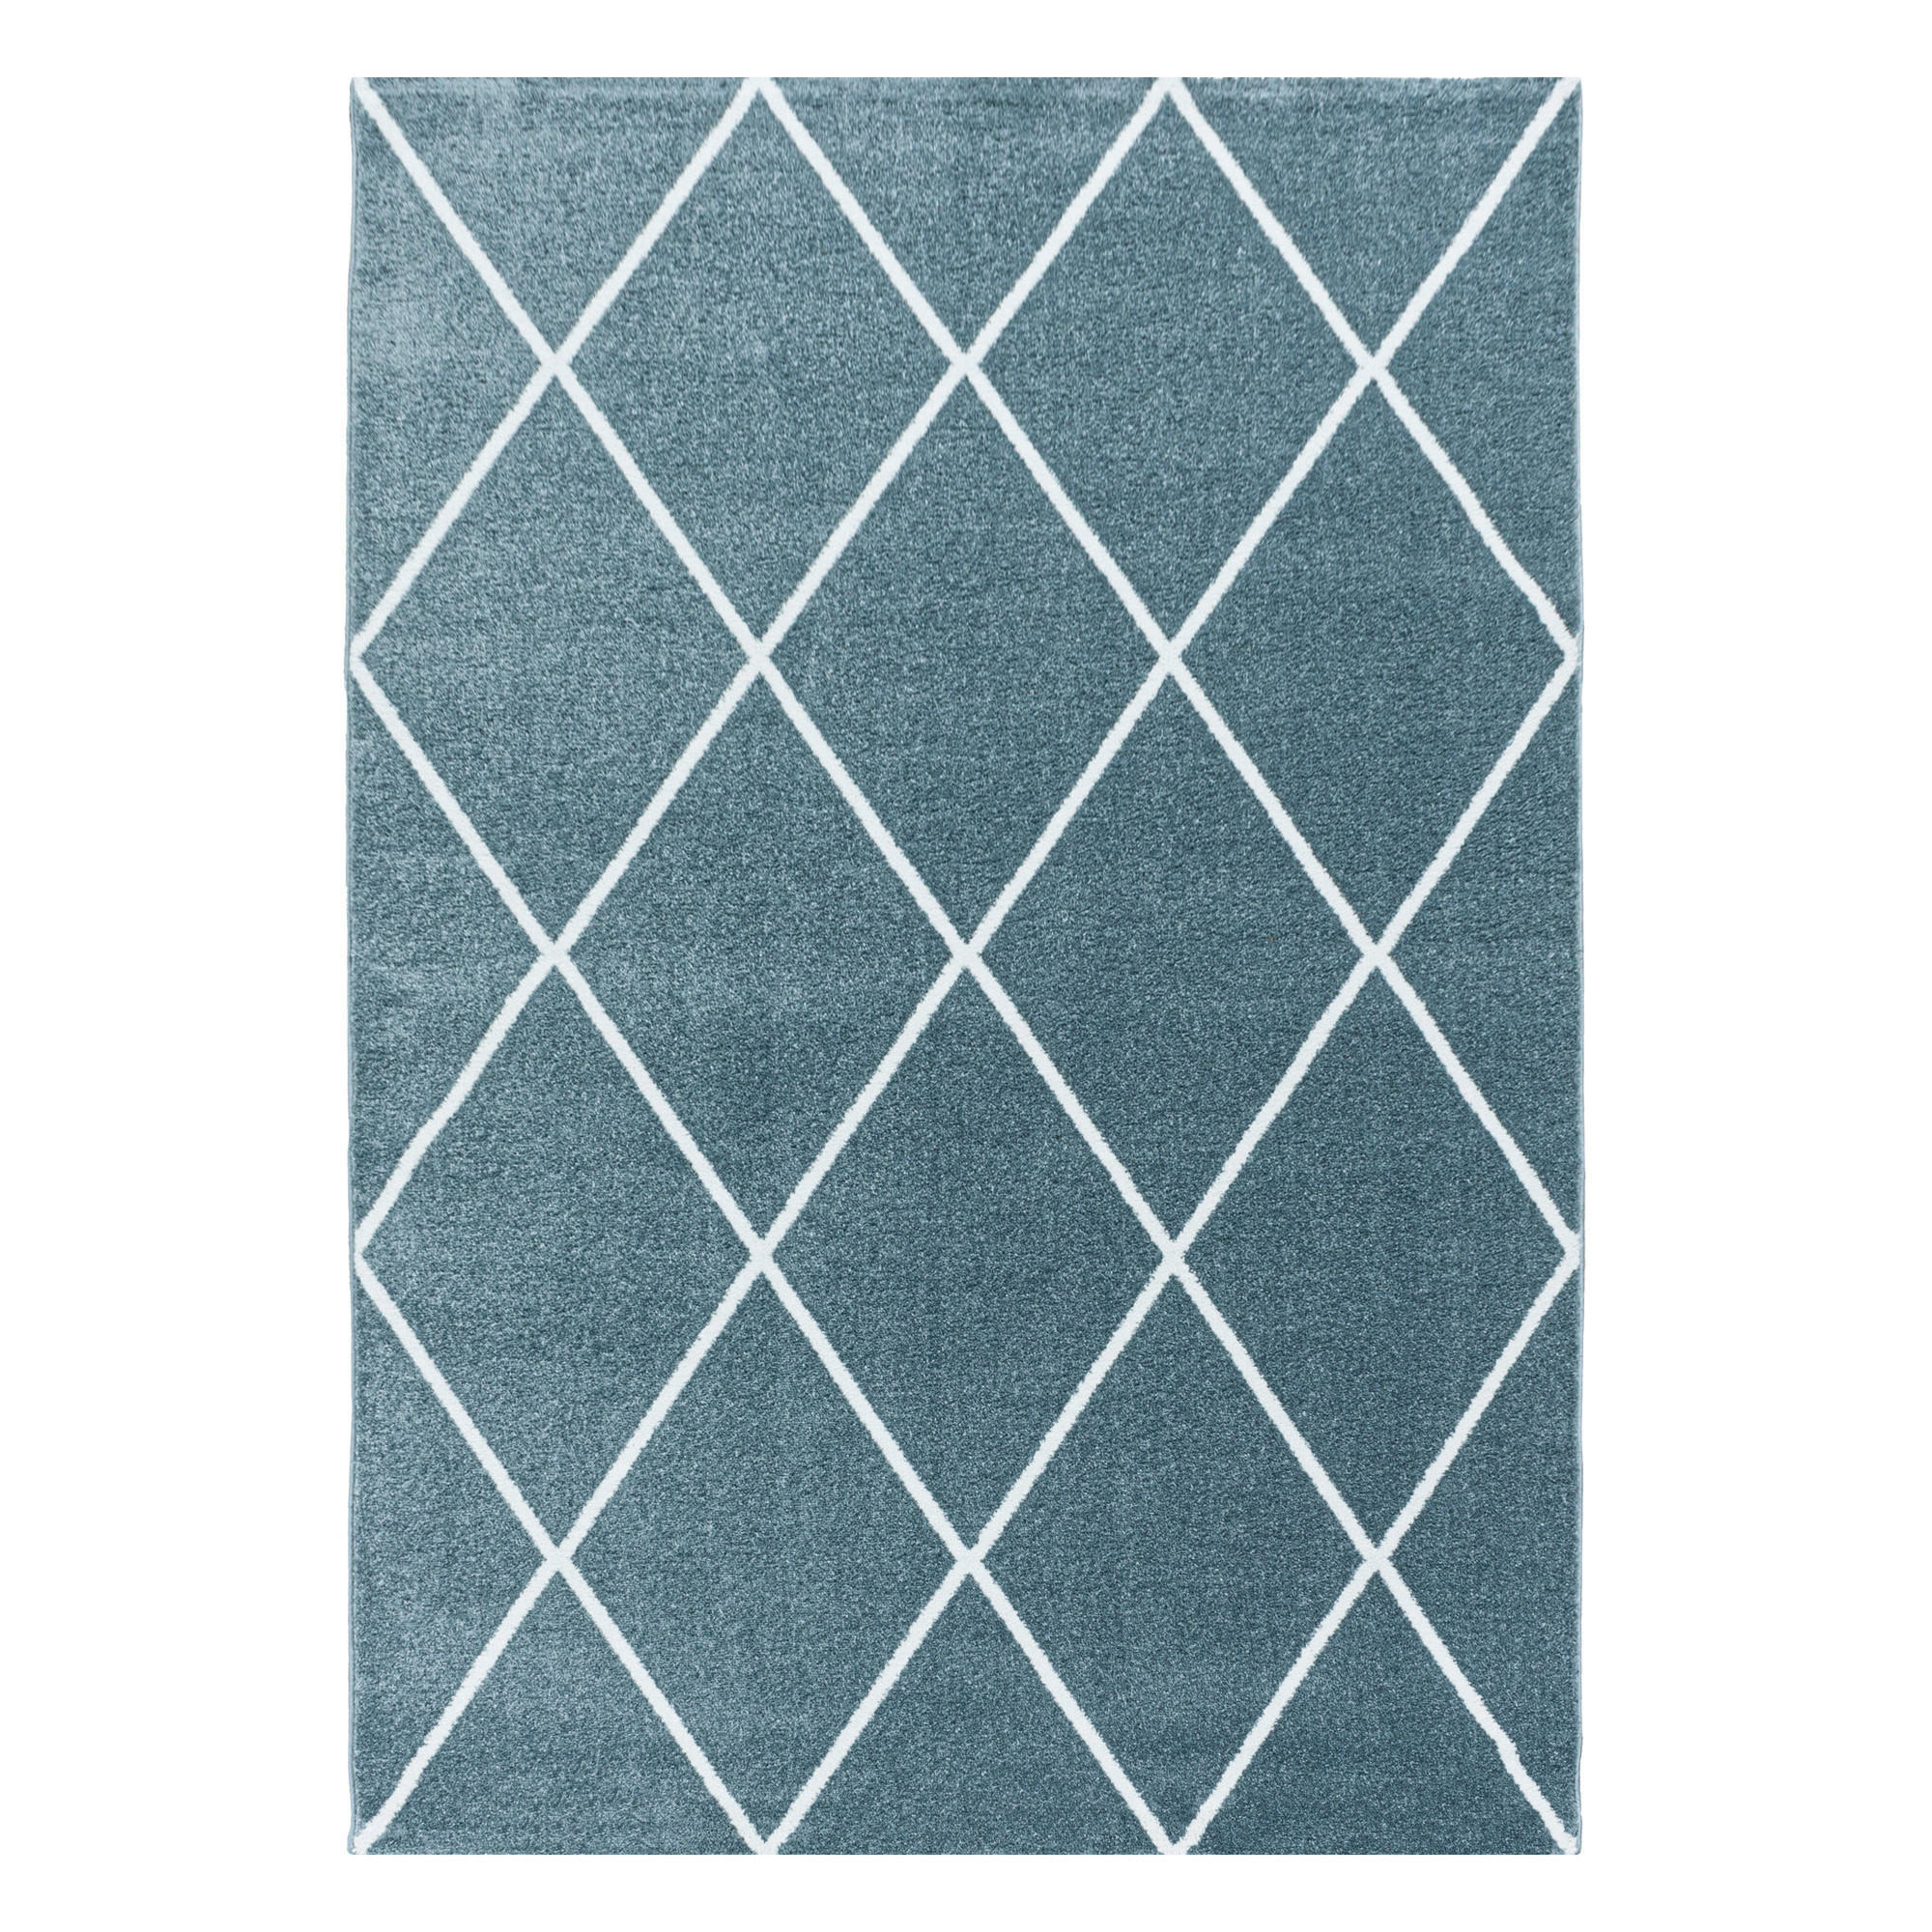 HOCHFLORTEPPICH 80/150 cm Rio 4601 blau  - Blau, Basics, Textil (80/150cm) - Novel